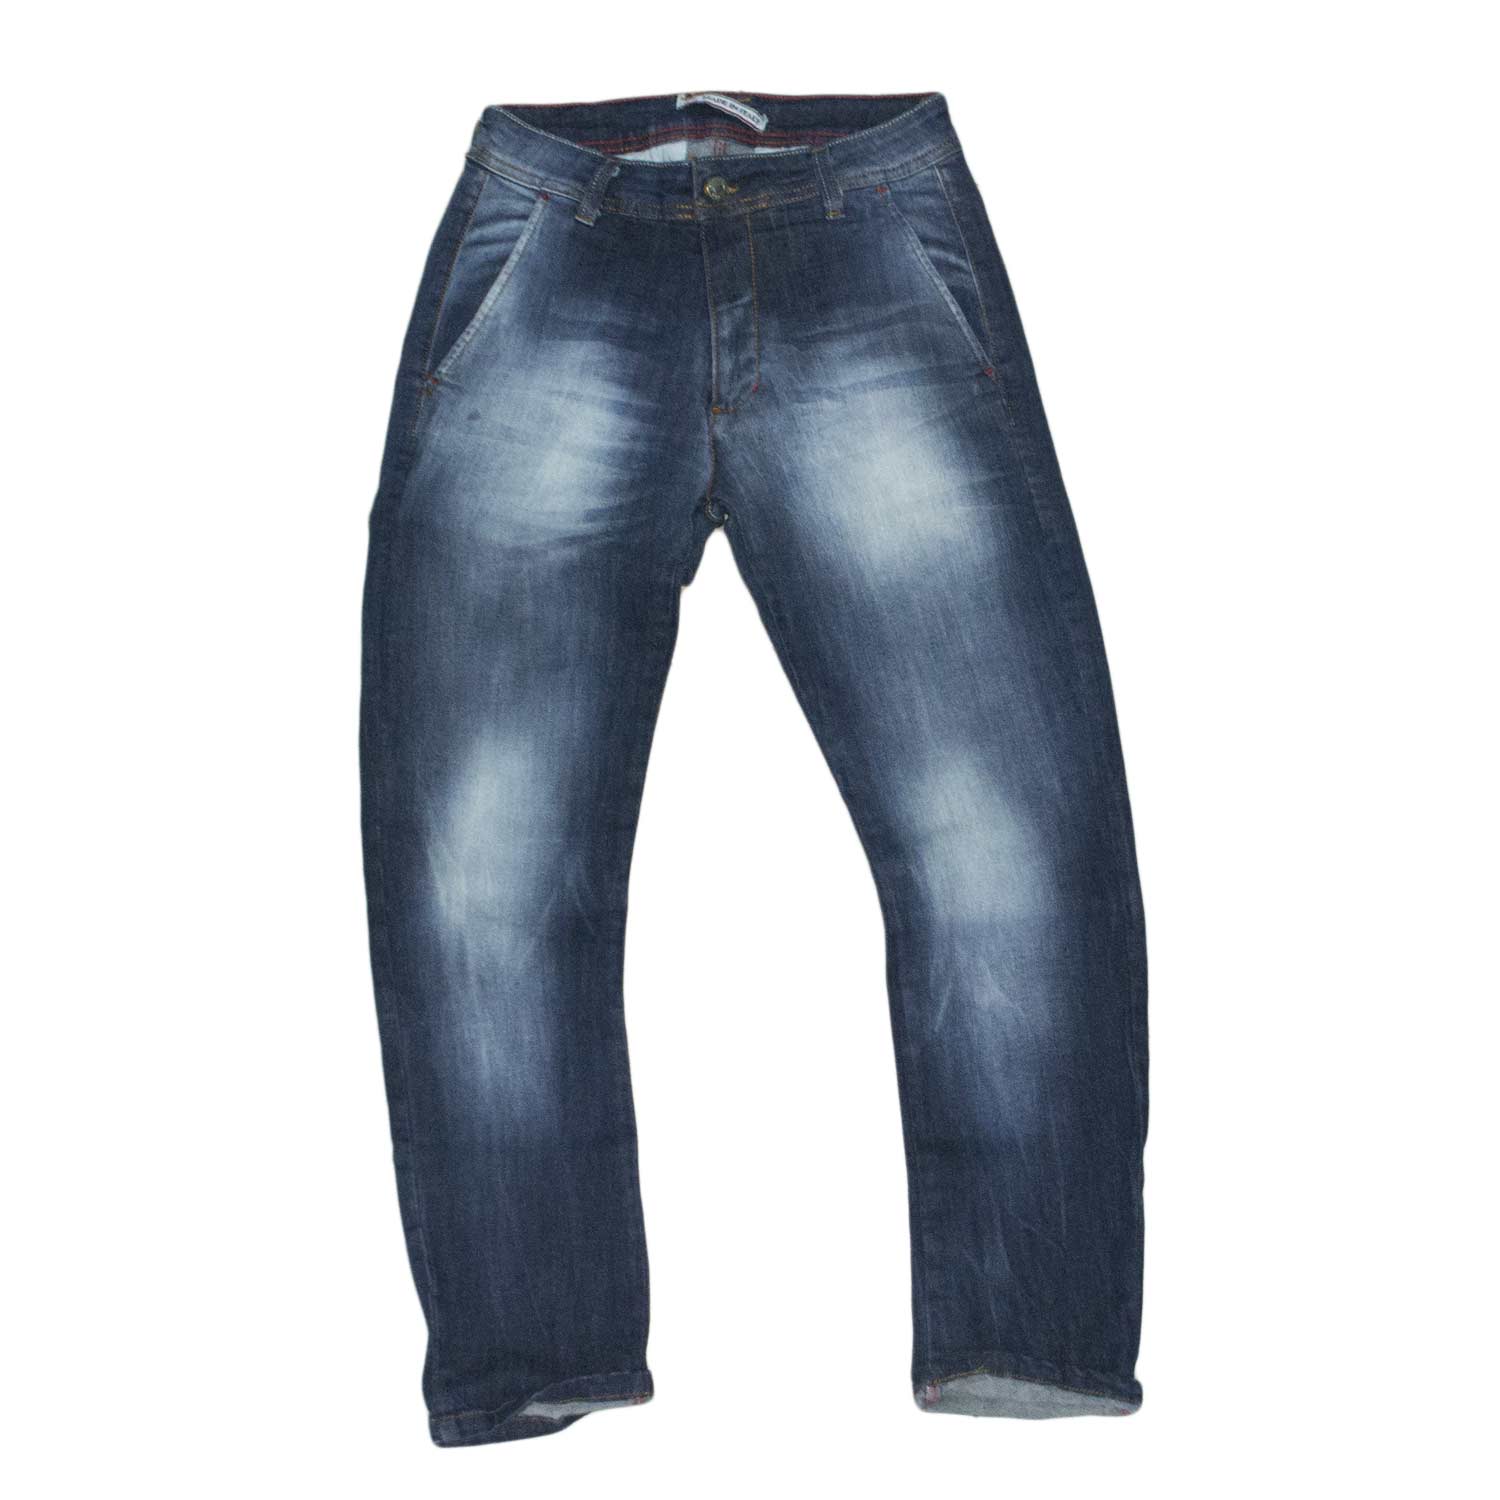 blu jeans uomo man moda made in italy.